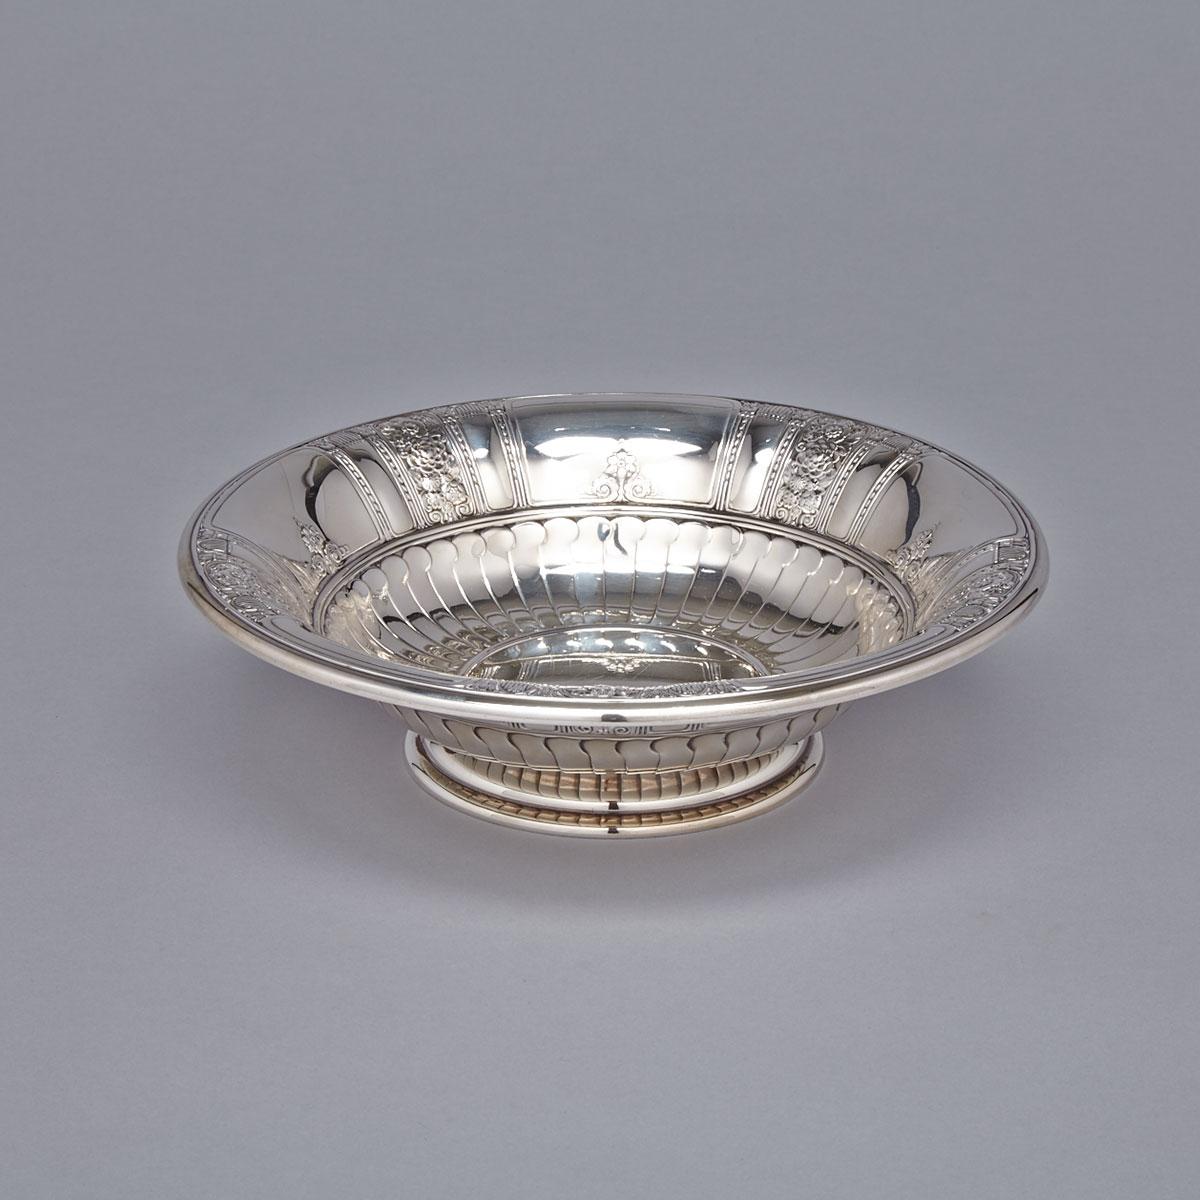 American Silver ‘Frontenac’ Bowl, Gorham Mfg. Co., Providence, R.I., 20th century